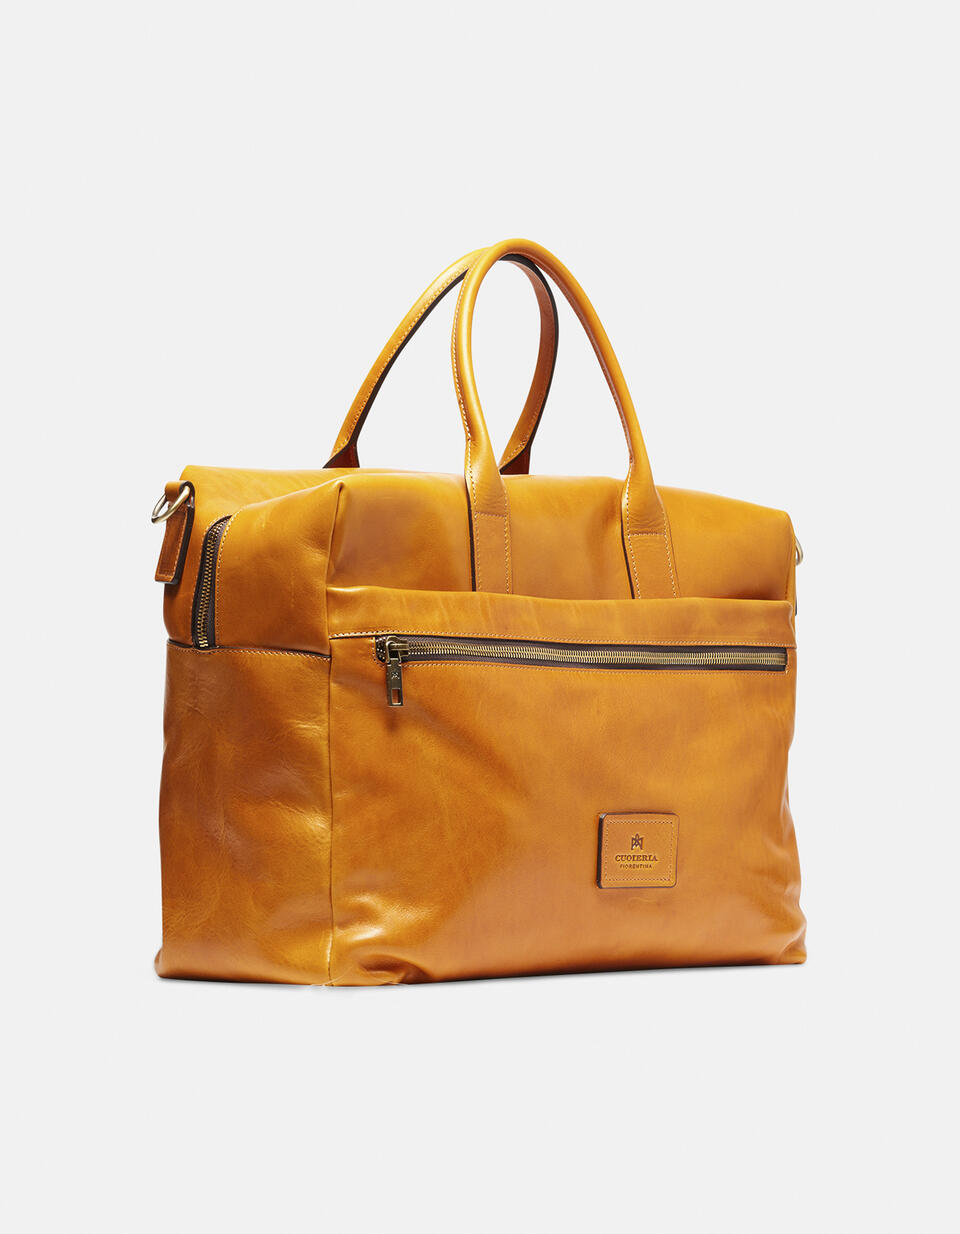 Tokyo small weekender bag - Luggage | TRAVEL BAGS GIALLO - Luggage | TRAVEL BAGSCuoieria Fiorentina